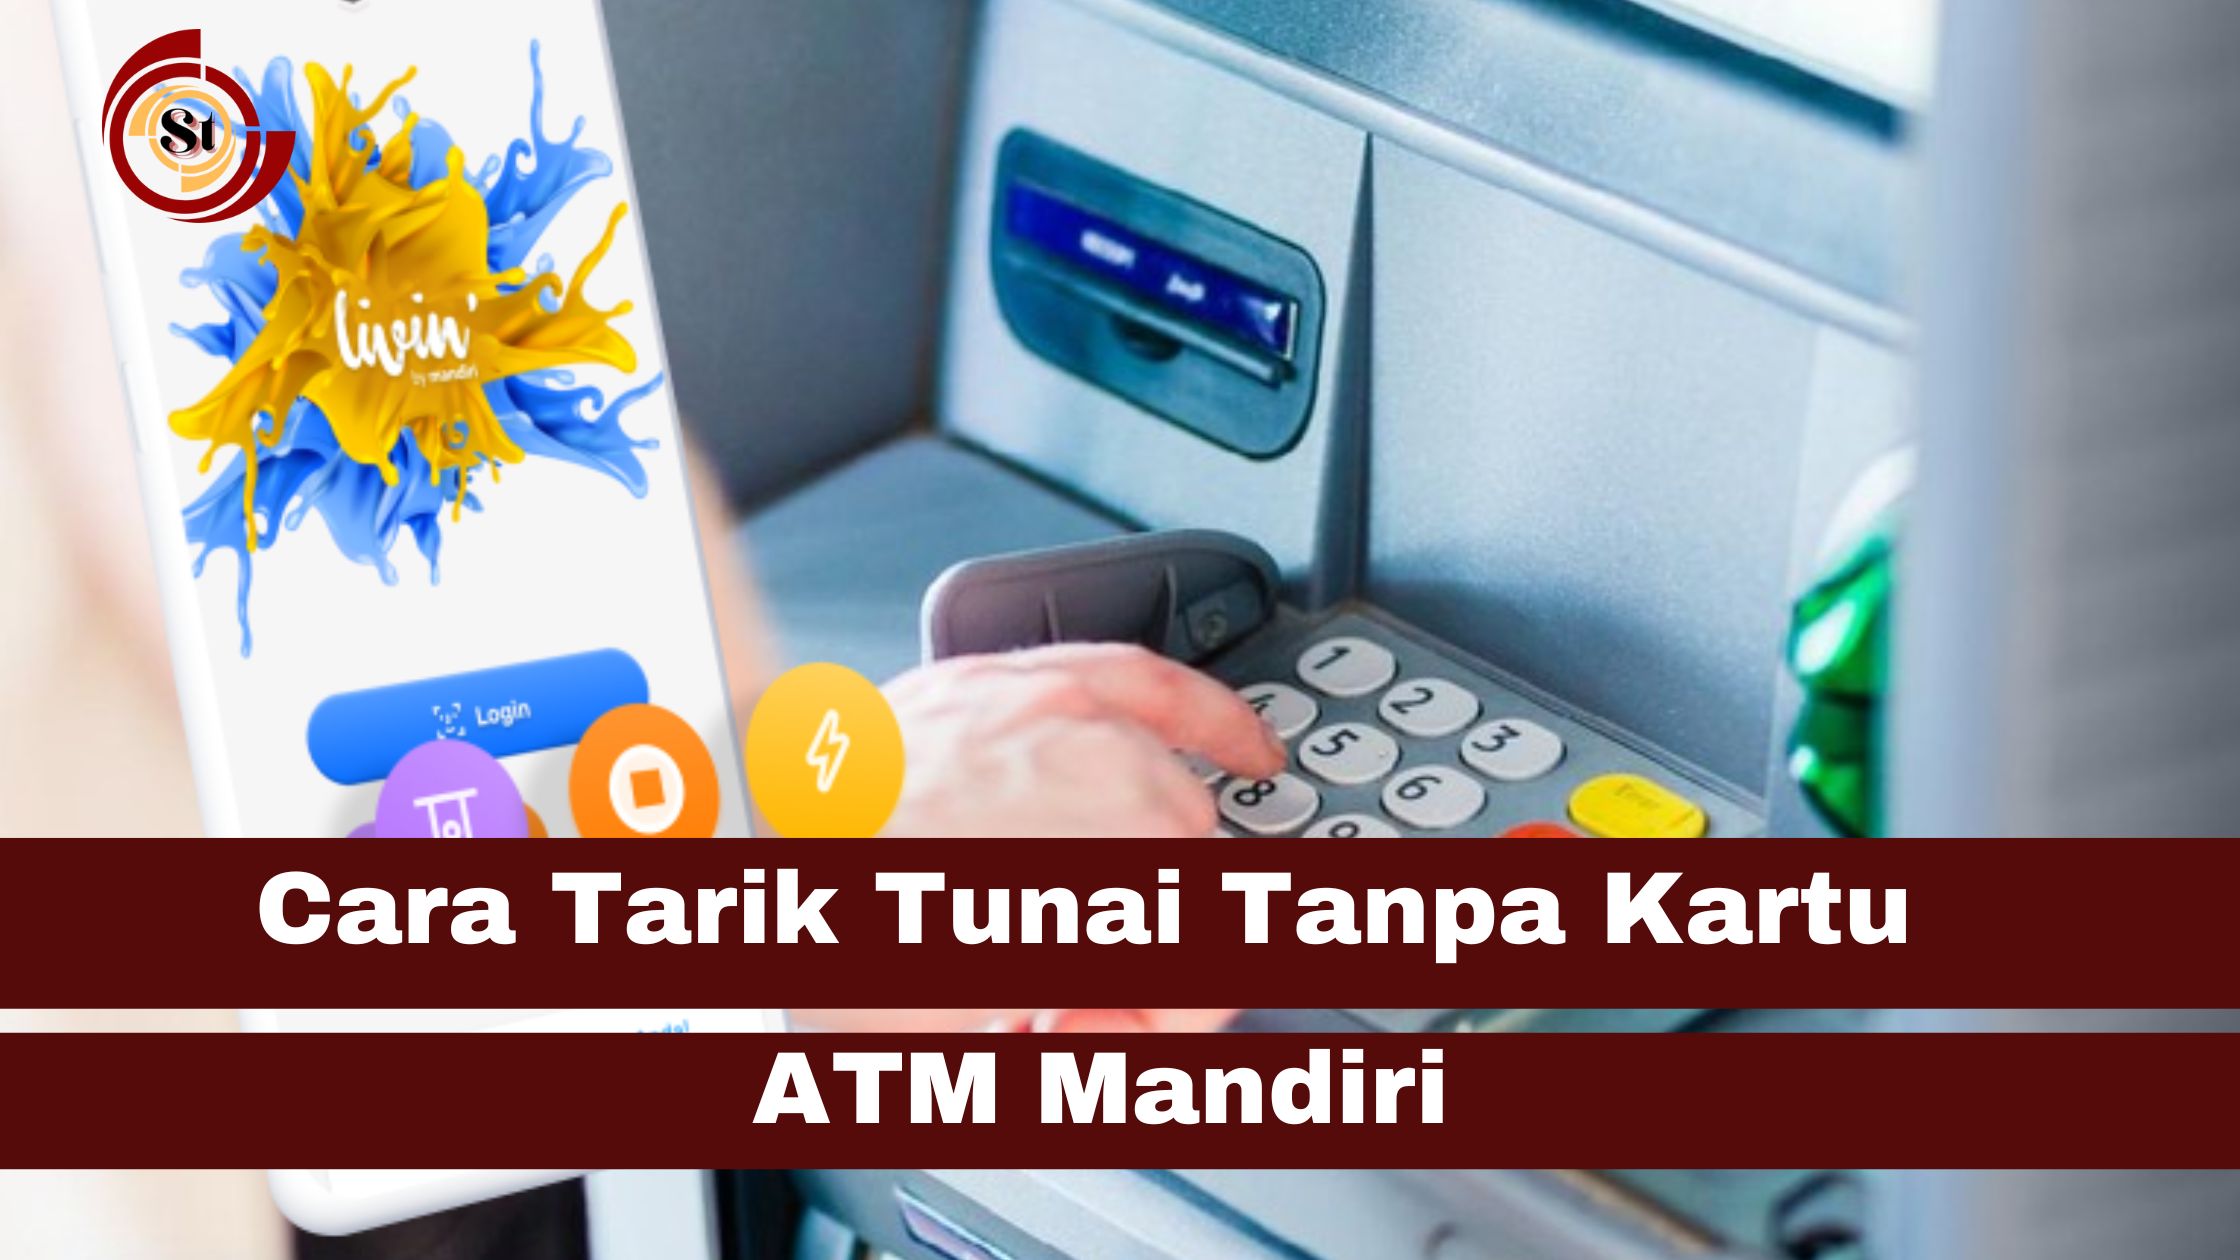 Tarik Tunai Tanpa Kartu ATM Mandiri